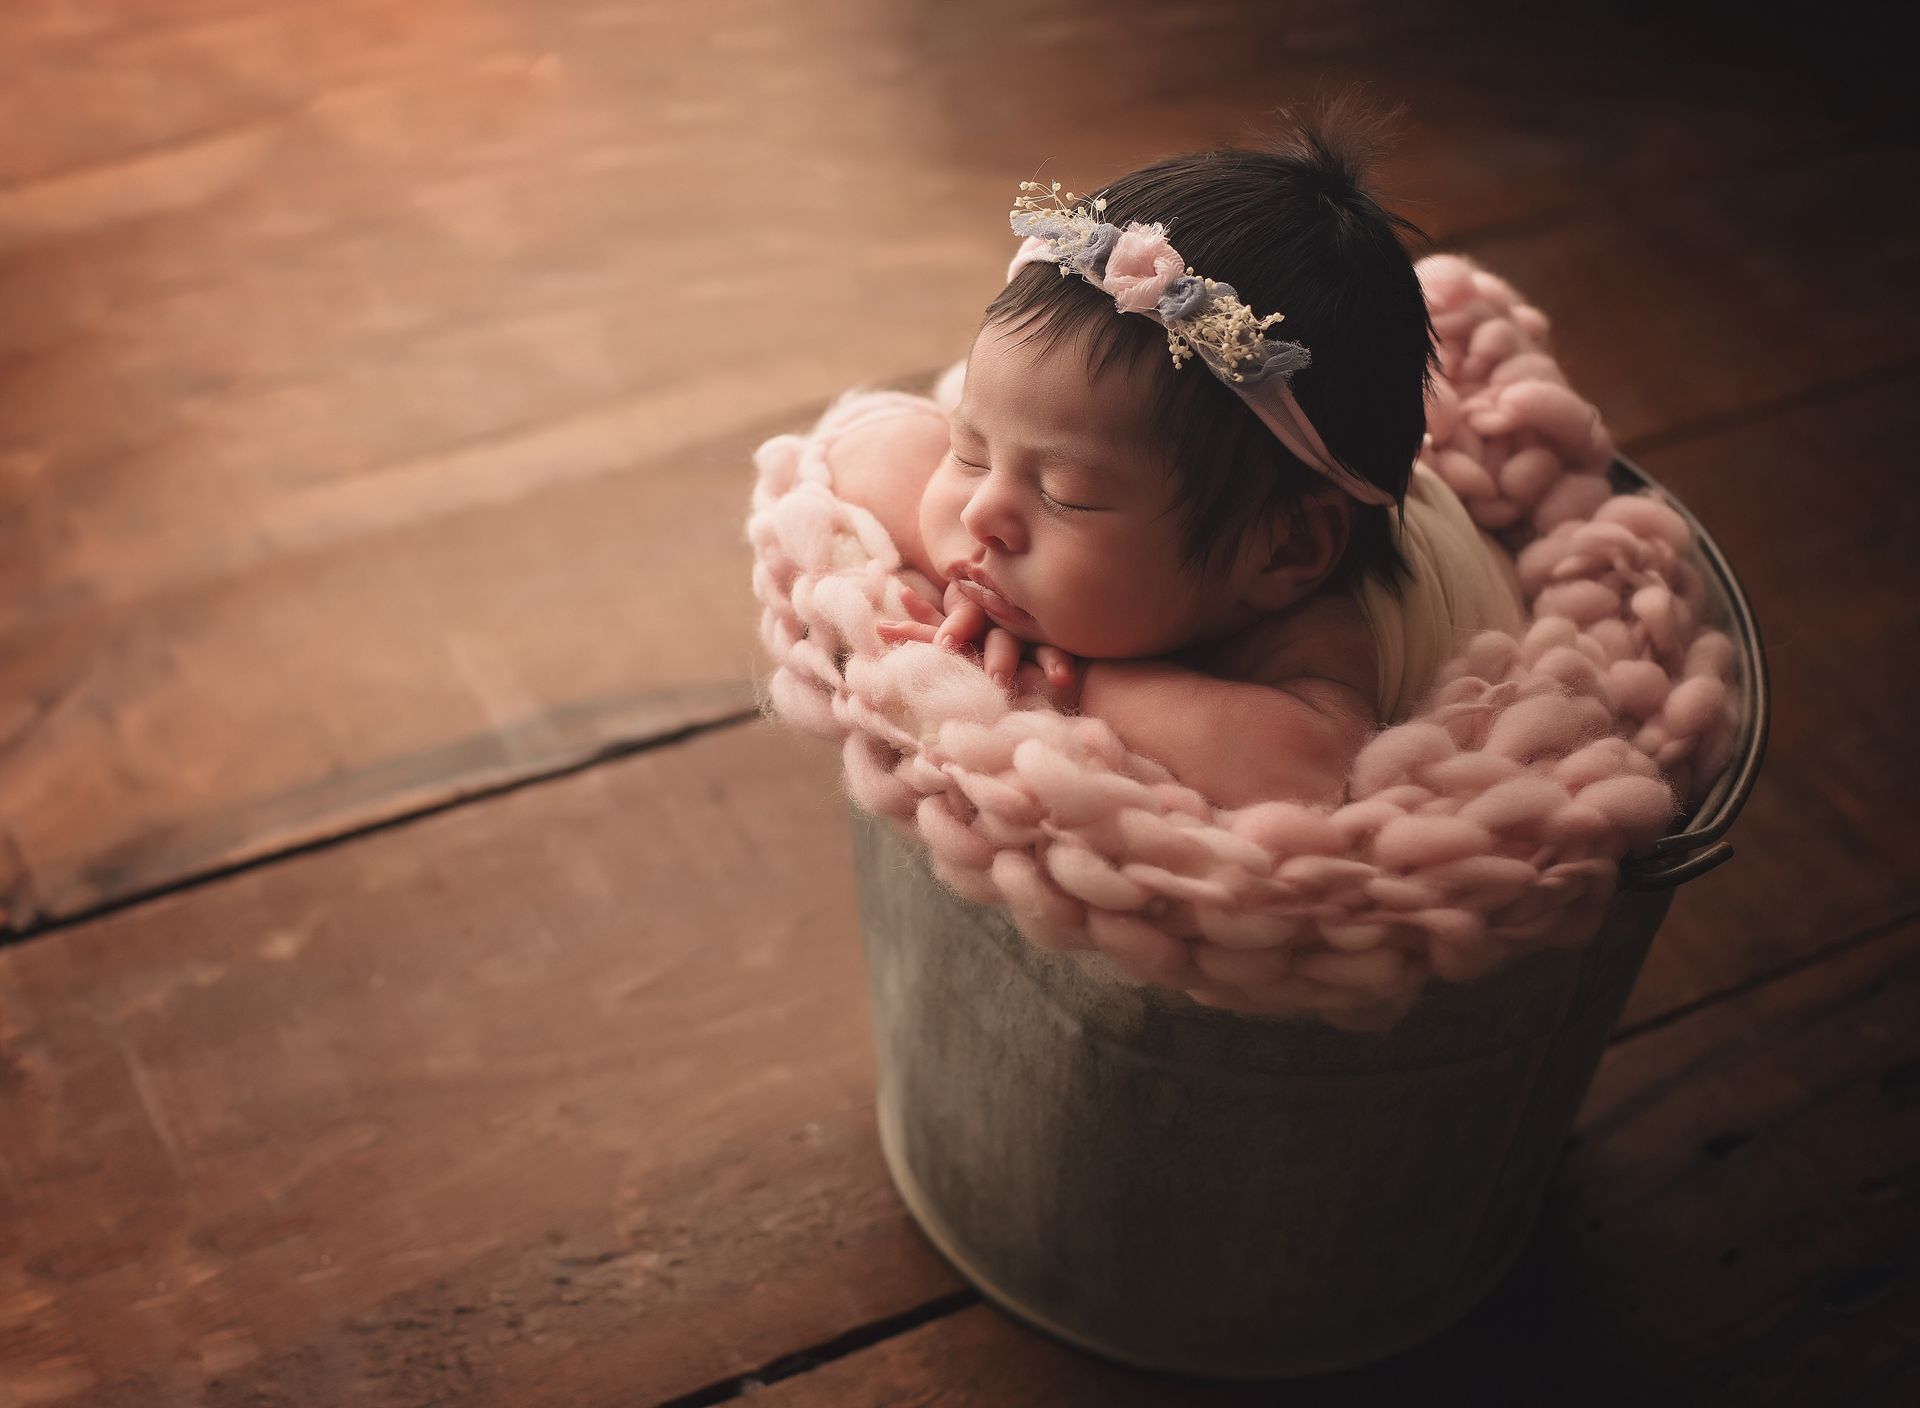 A newborn baby is sleeping in a bucket on a wooden floor.